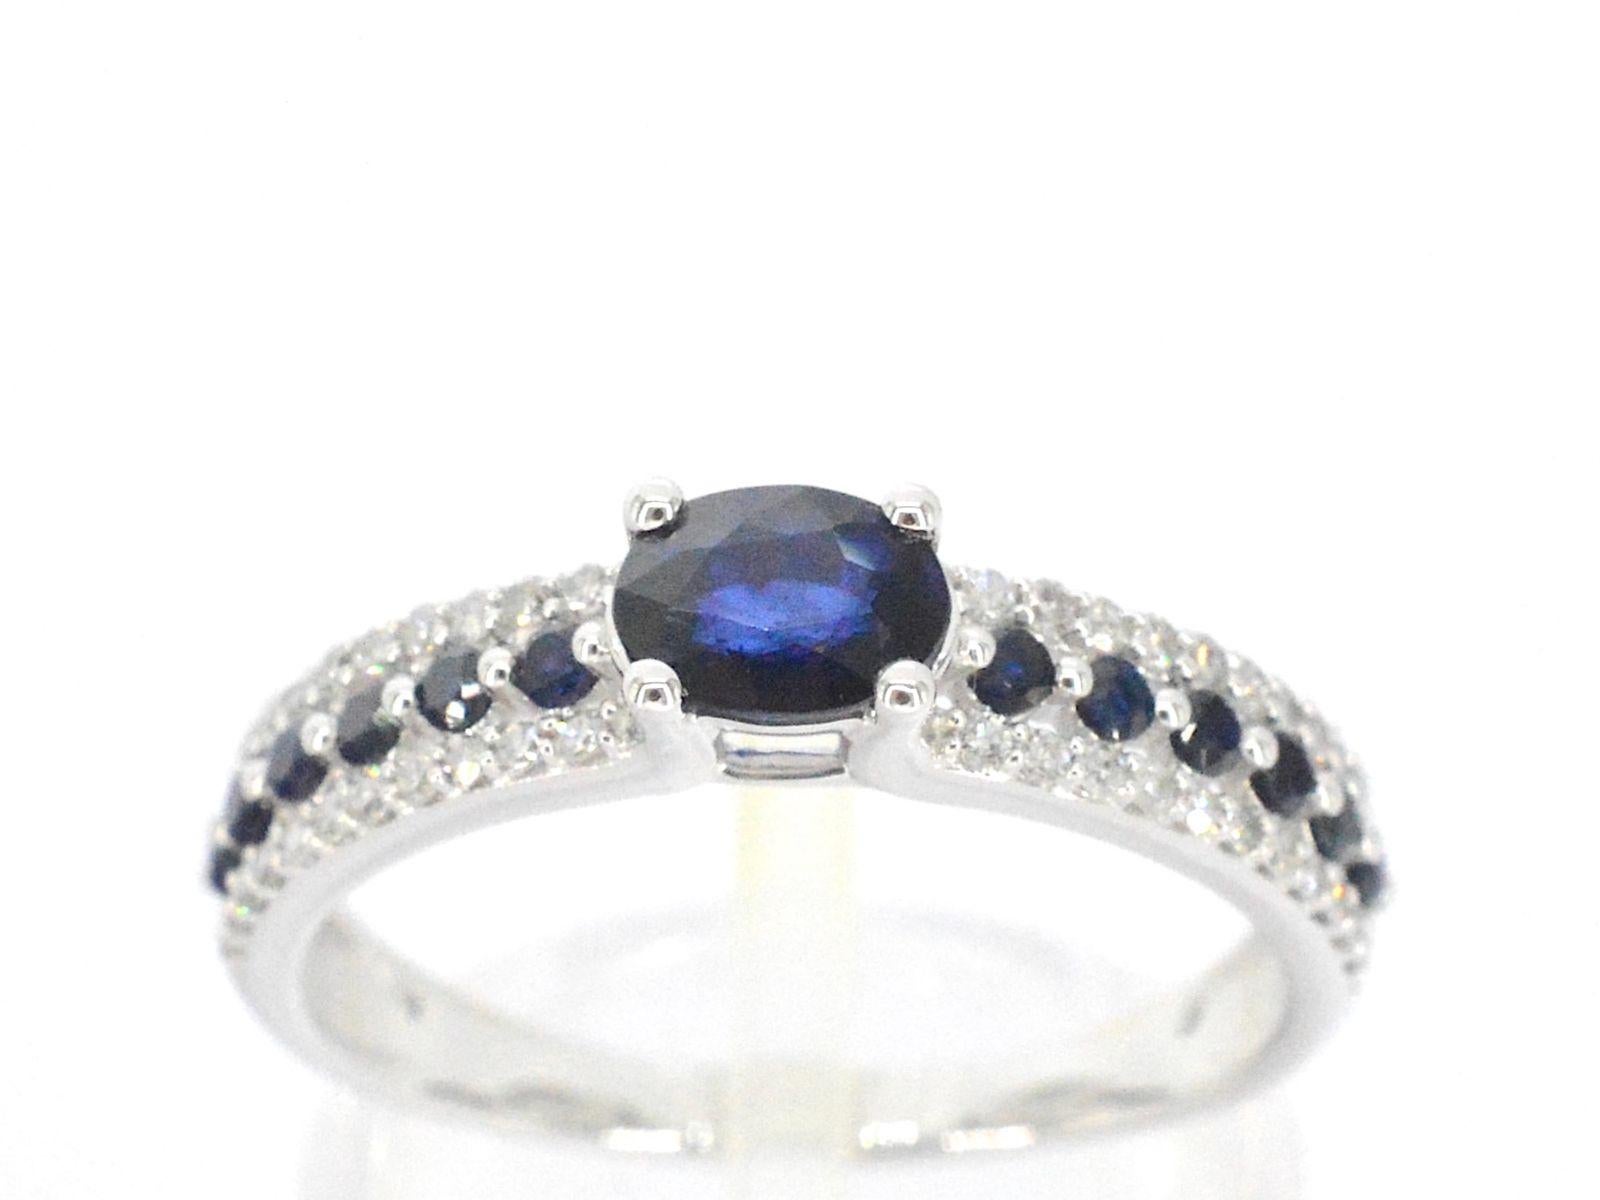 Diamonds: 44 pieces

Weight: 0.25 carat

Cut: Single cut

Colour: F-G

Clarity: SI-P

Quality: Very good

Gemstone: Sapphire

Cut: Round cut and oval

Weight: 0.20 carat

Colour: Blue

Jewel: Ring

Weight: 3.3 gram

Hallmark: 14 karat 

Ring Size: